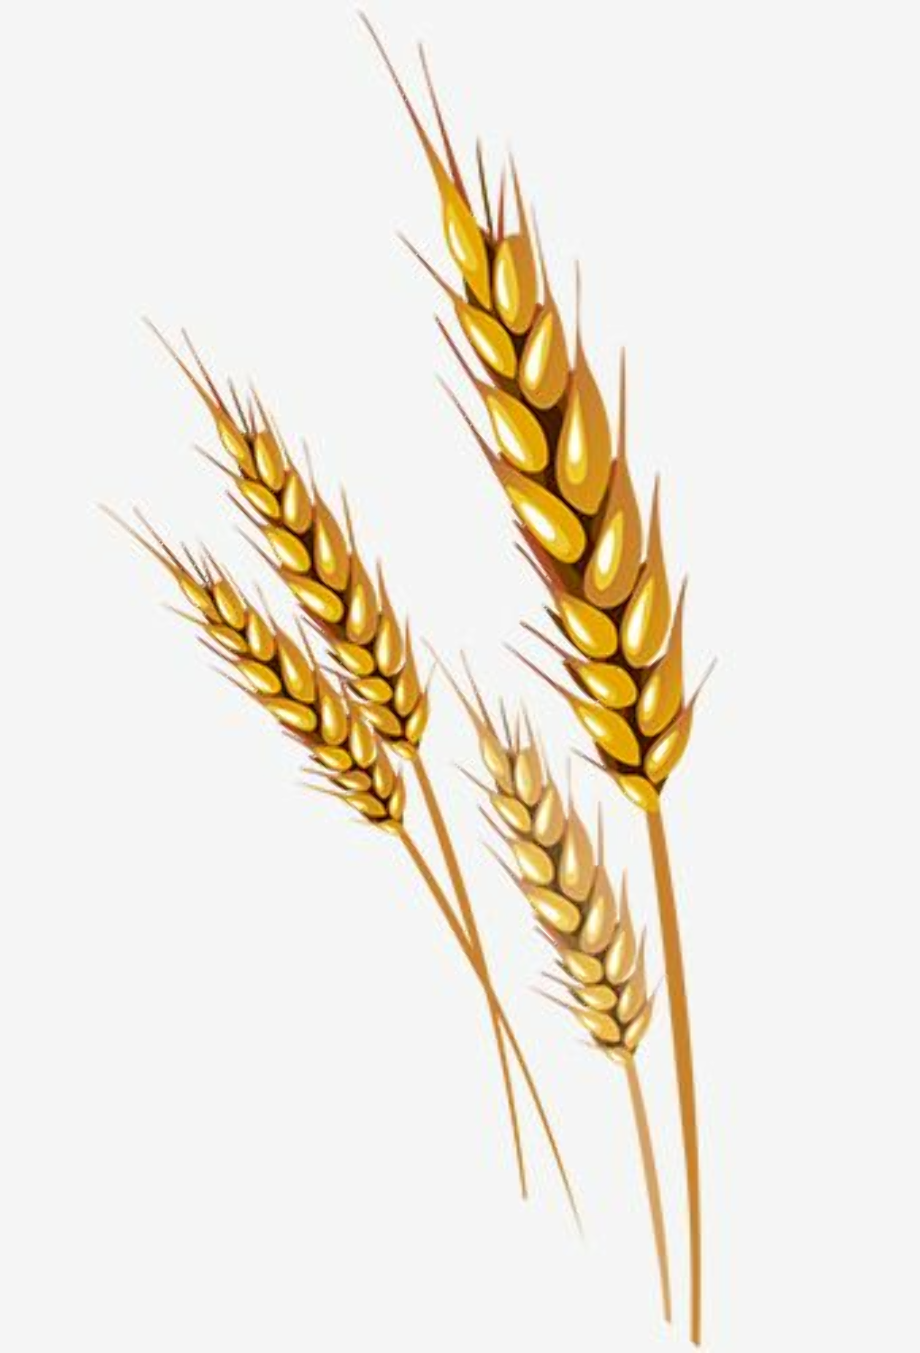 wheat illustration free download